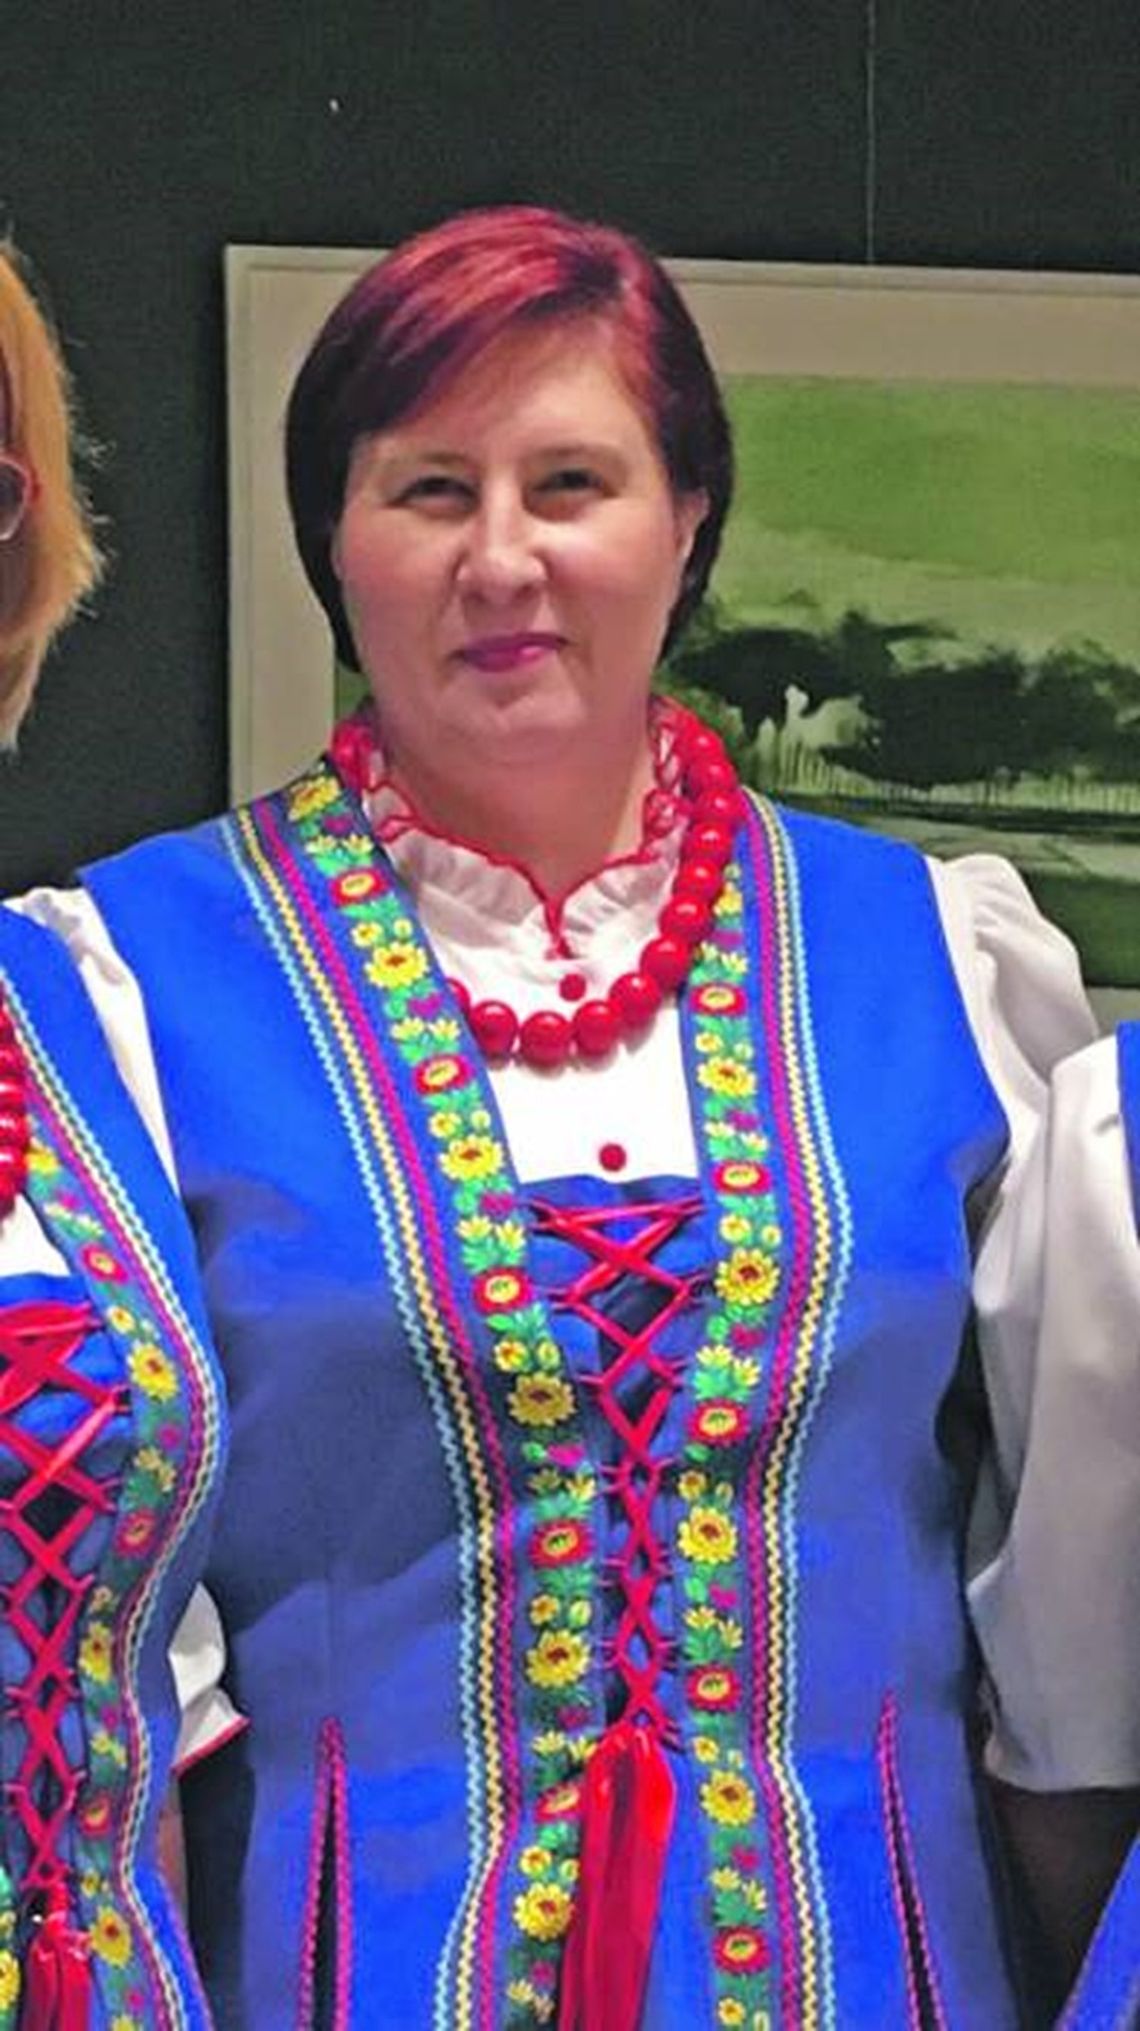 Anna Szpura